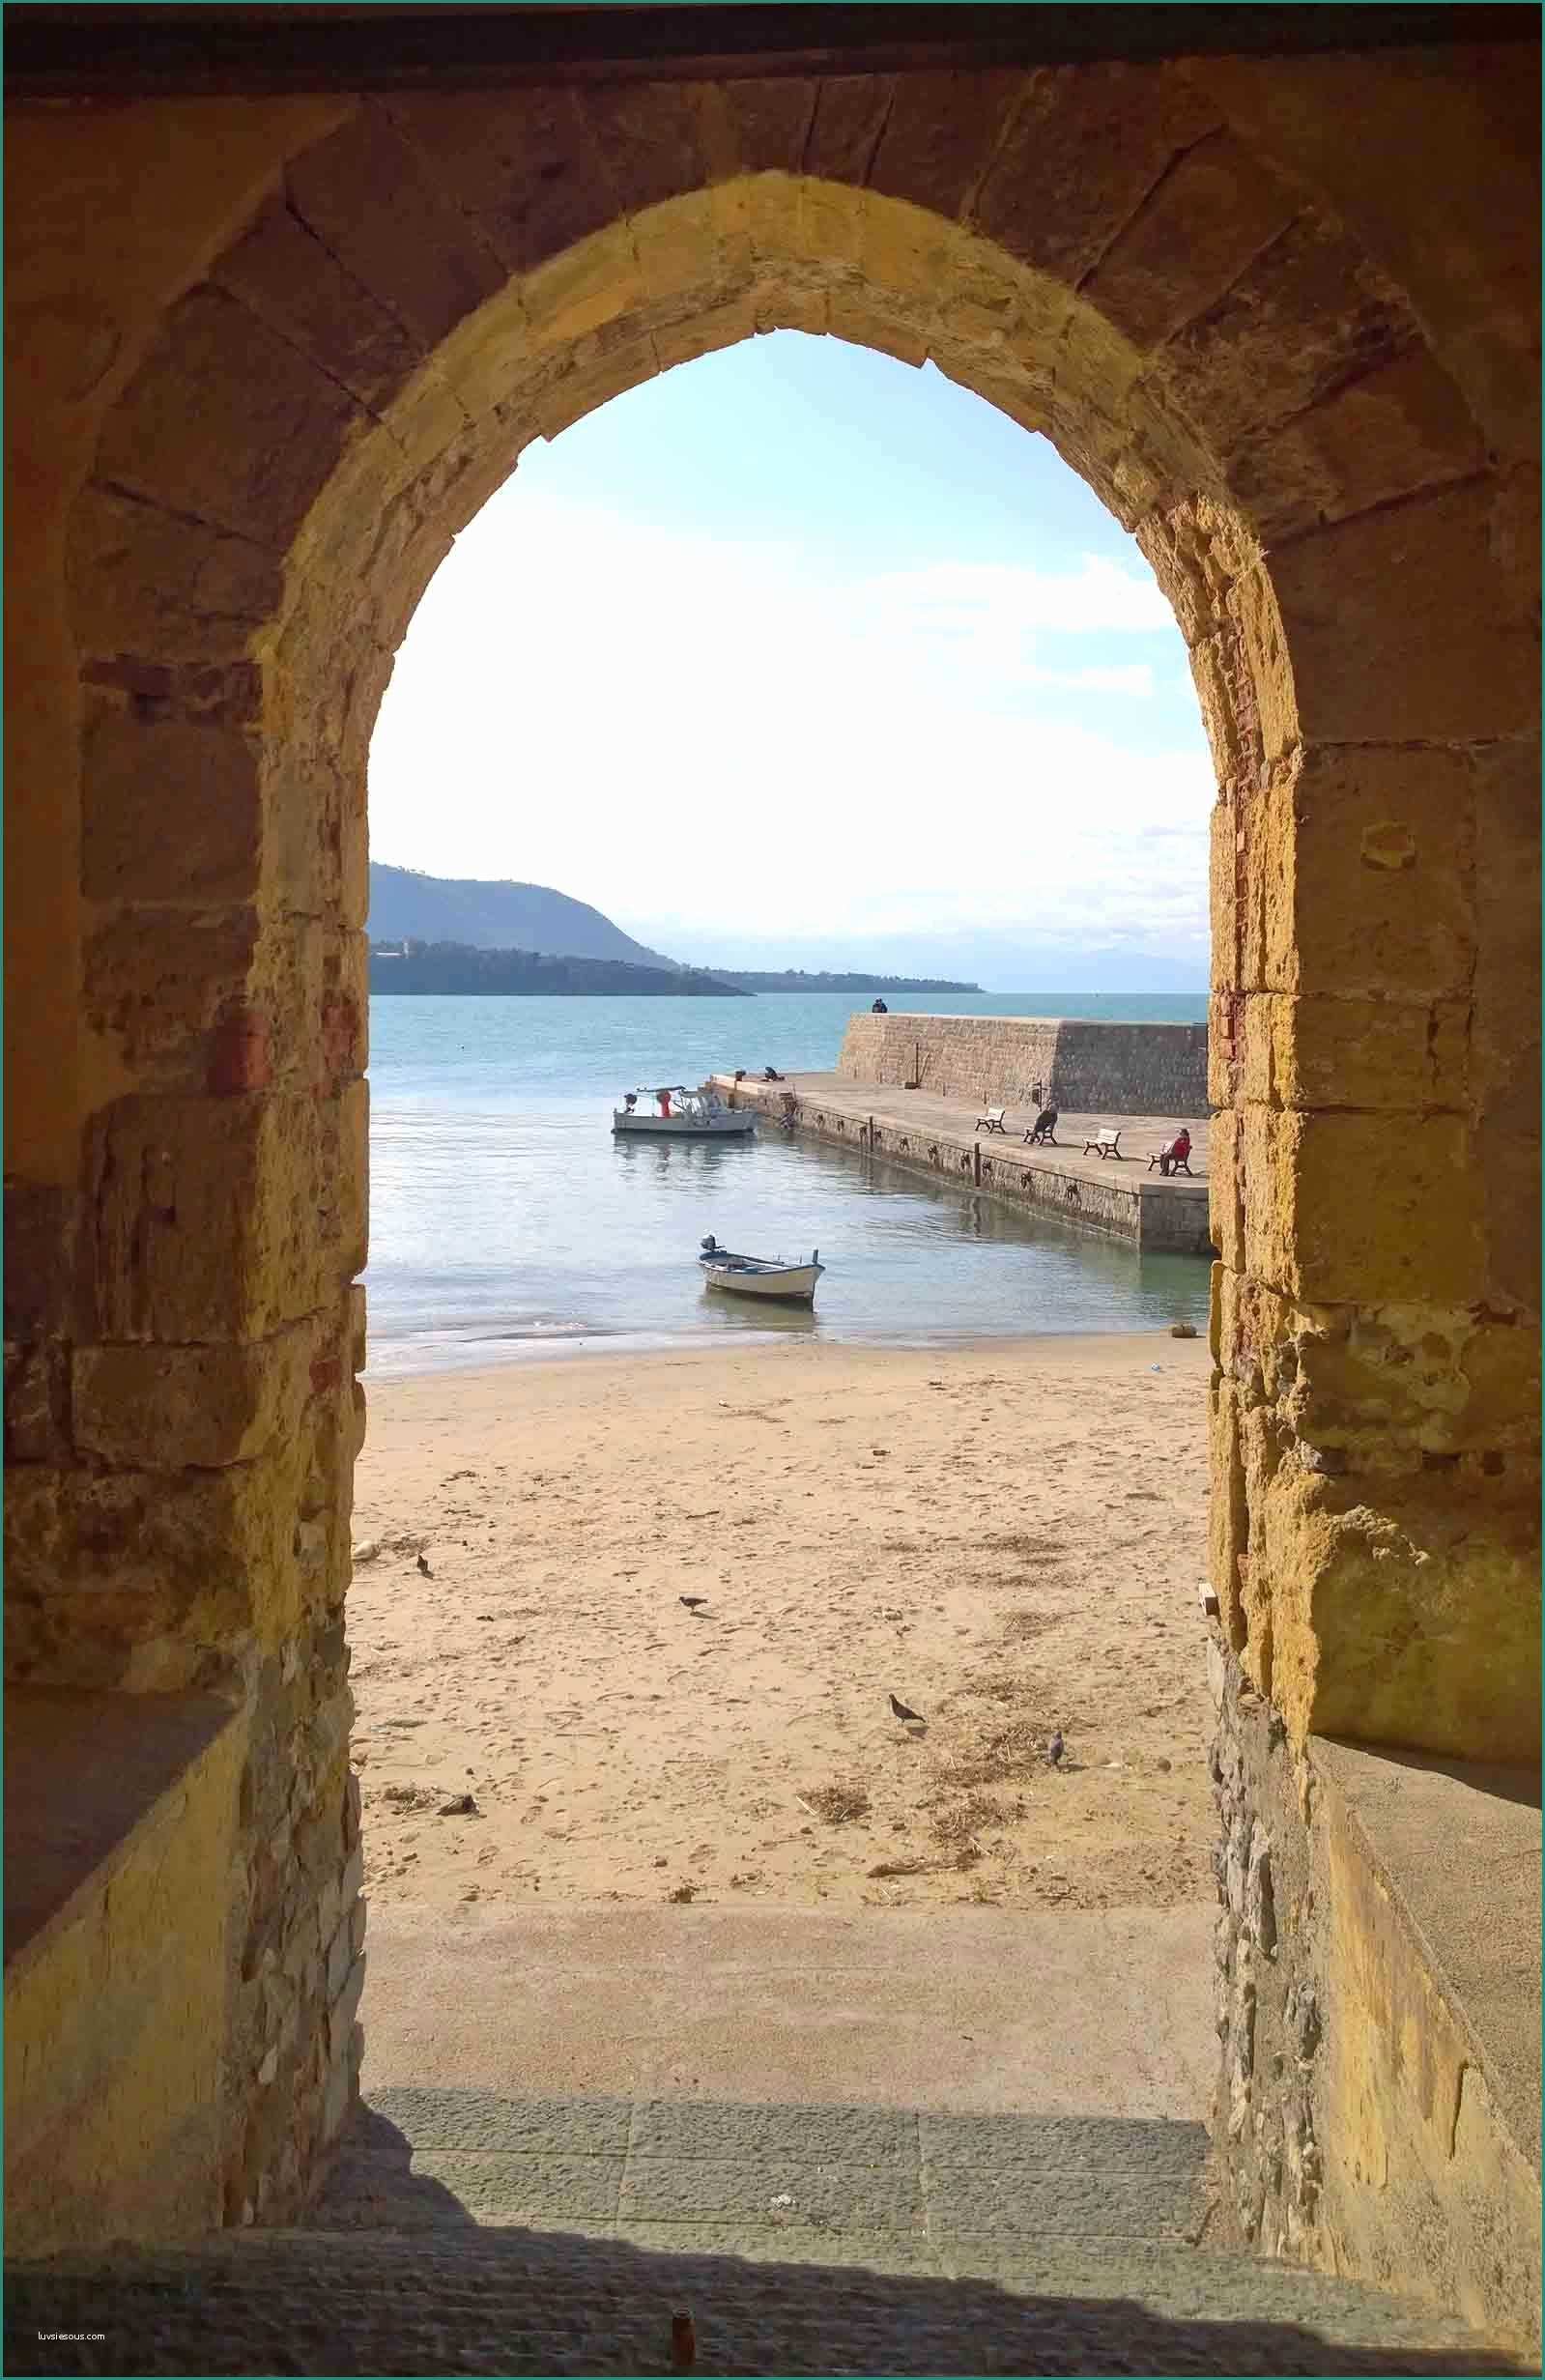 Foto Di Paesaggi Marini E Peeping Through An Arch In the Coastal town Of Cefalu Sicily